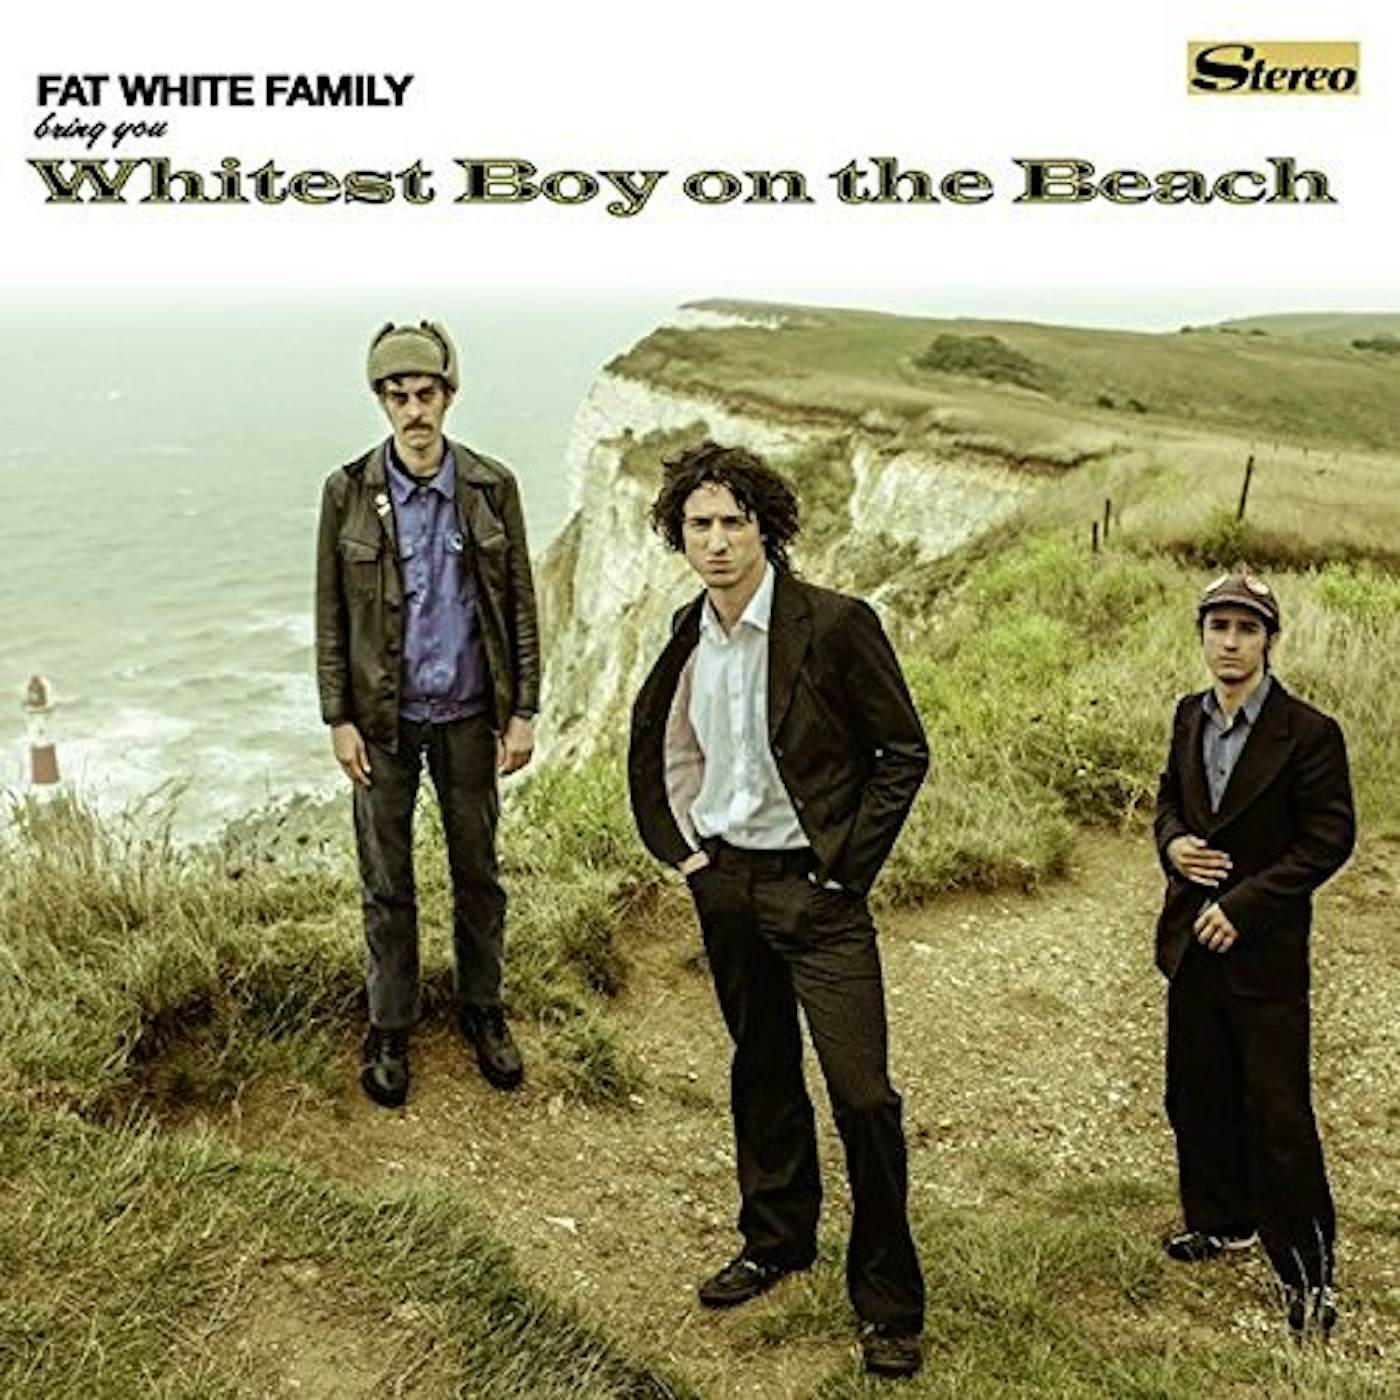 Fat White Family WHITEST BOY ON THE BEACH Vinyl Record - UK Release